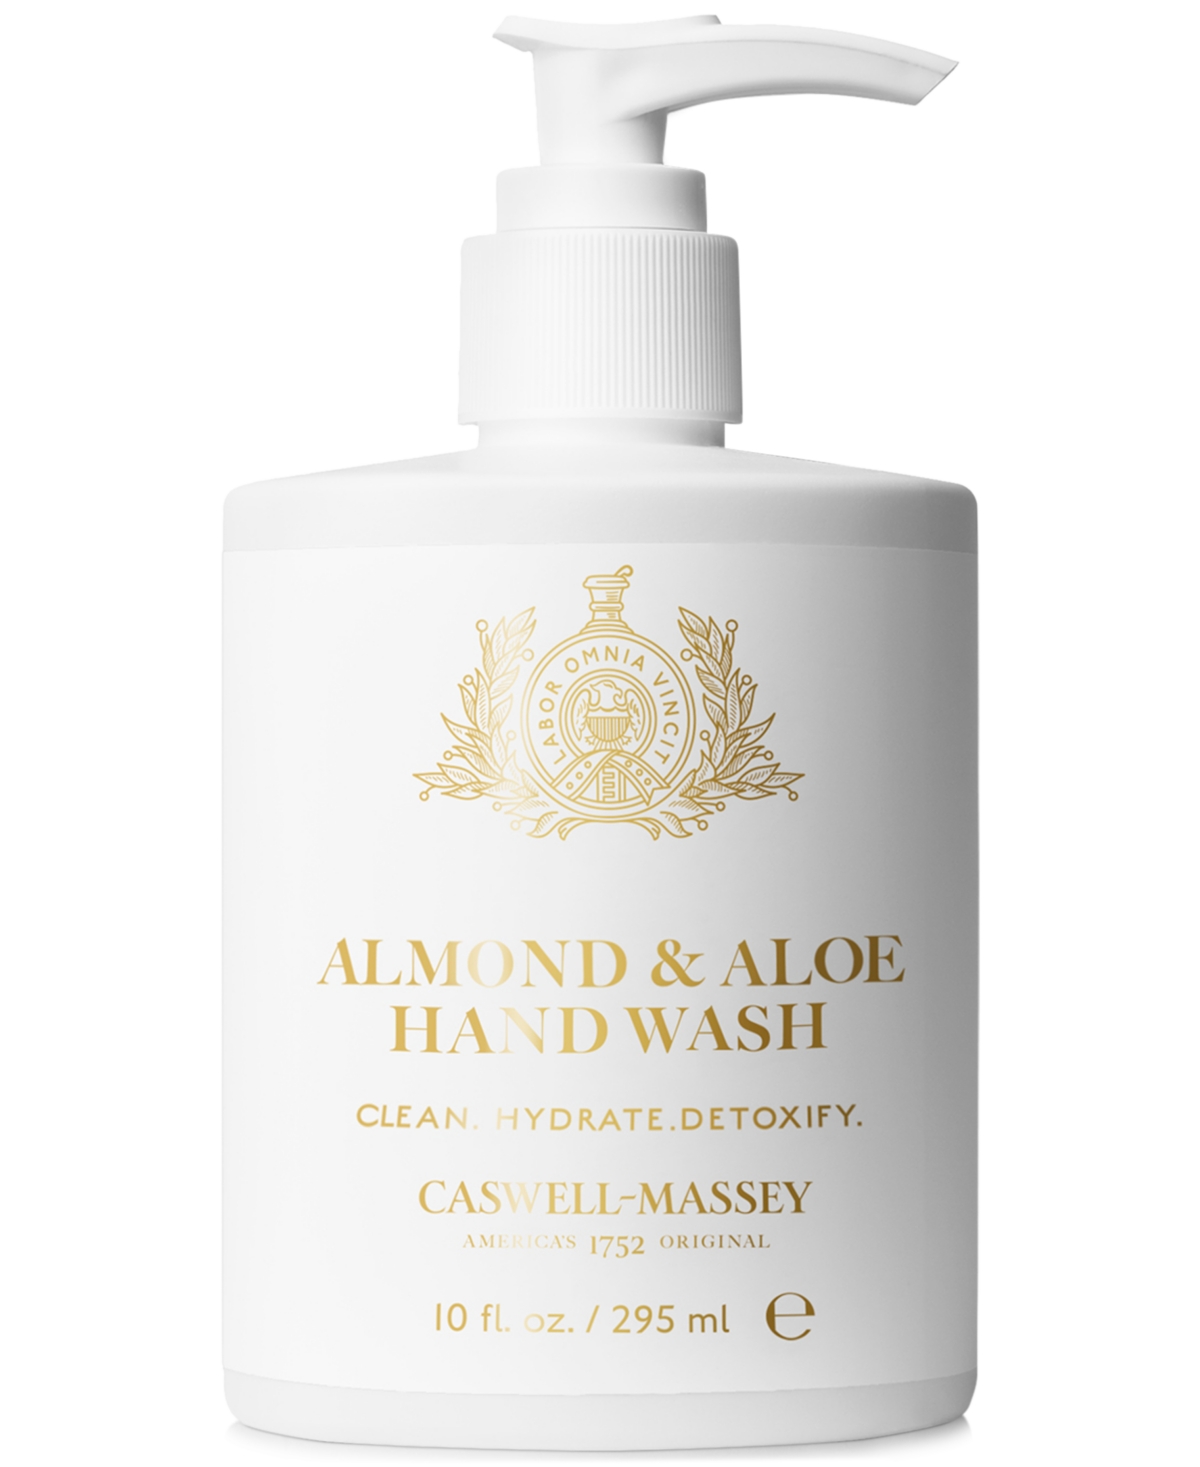 Caswell-massey Centuries Almond & Aloe Hand Wash, 10 Oz.